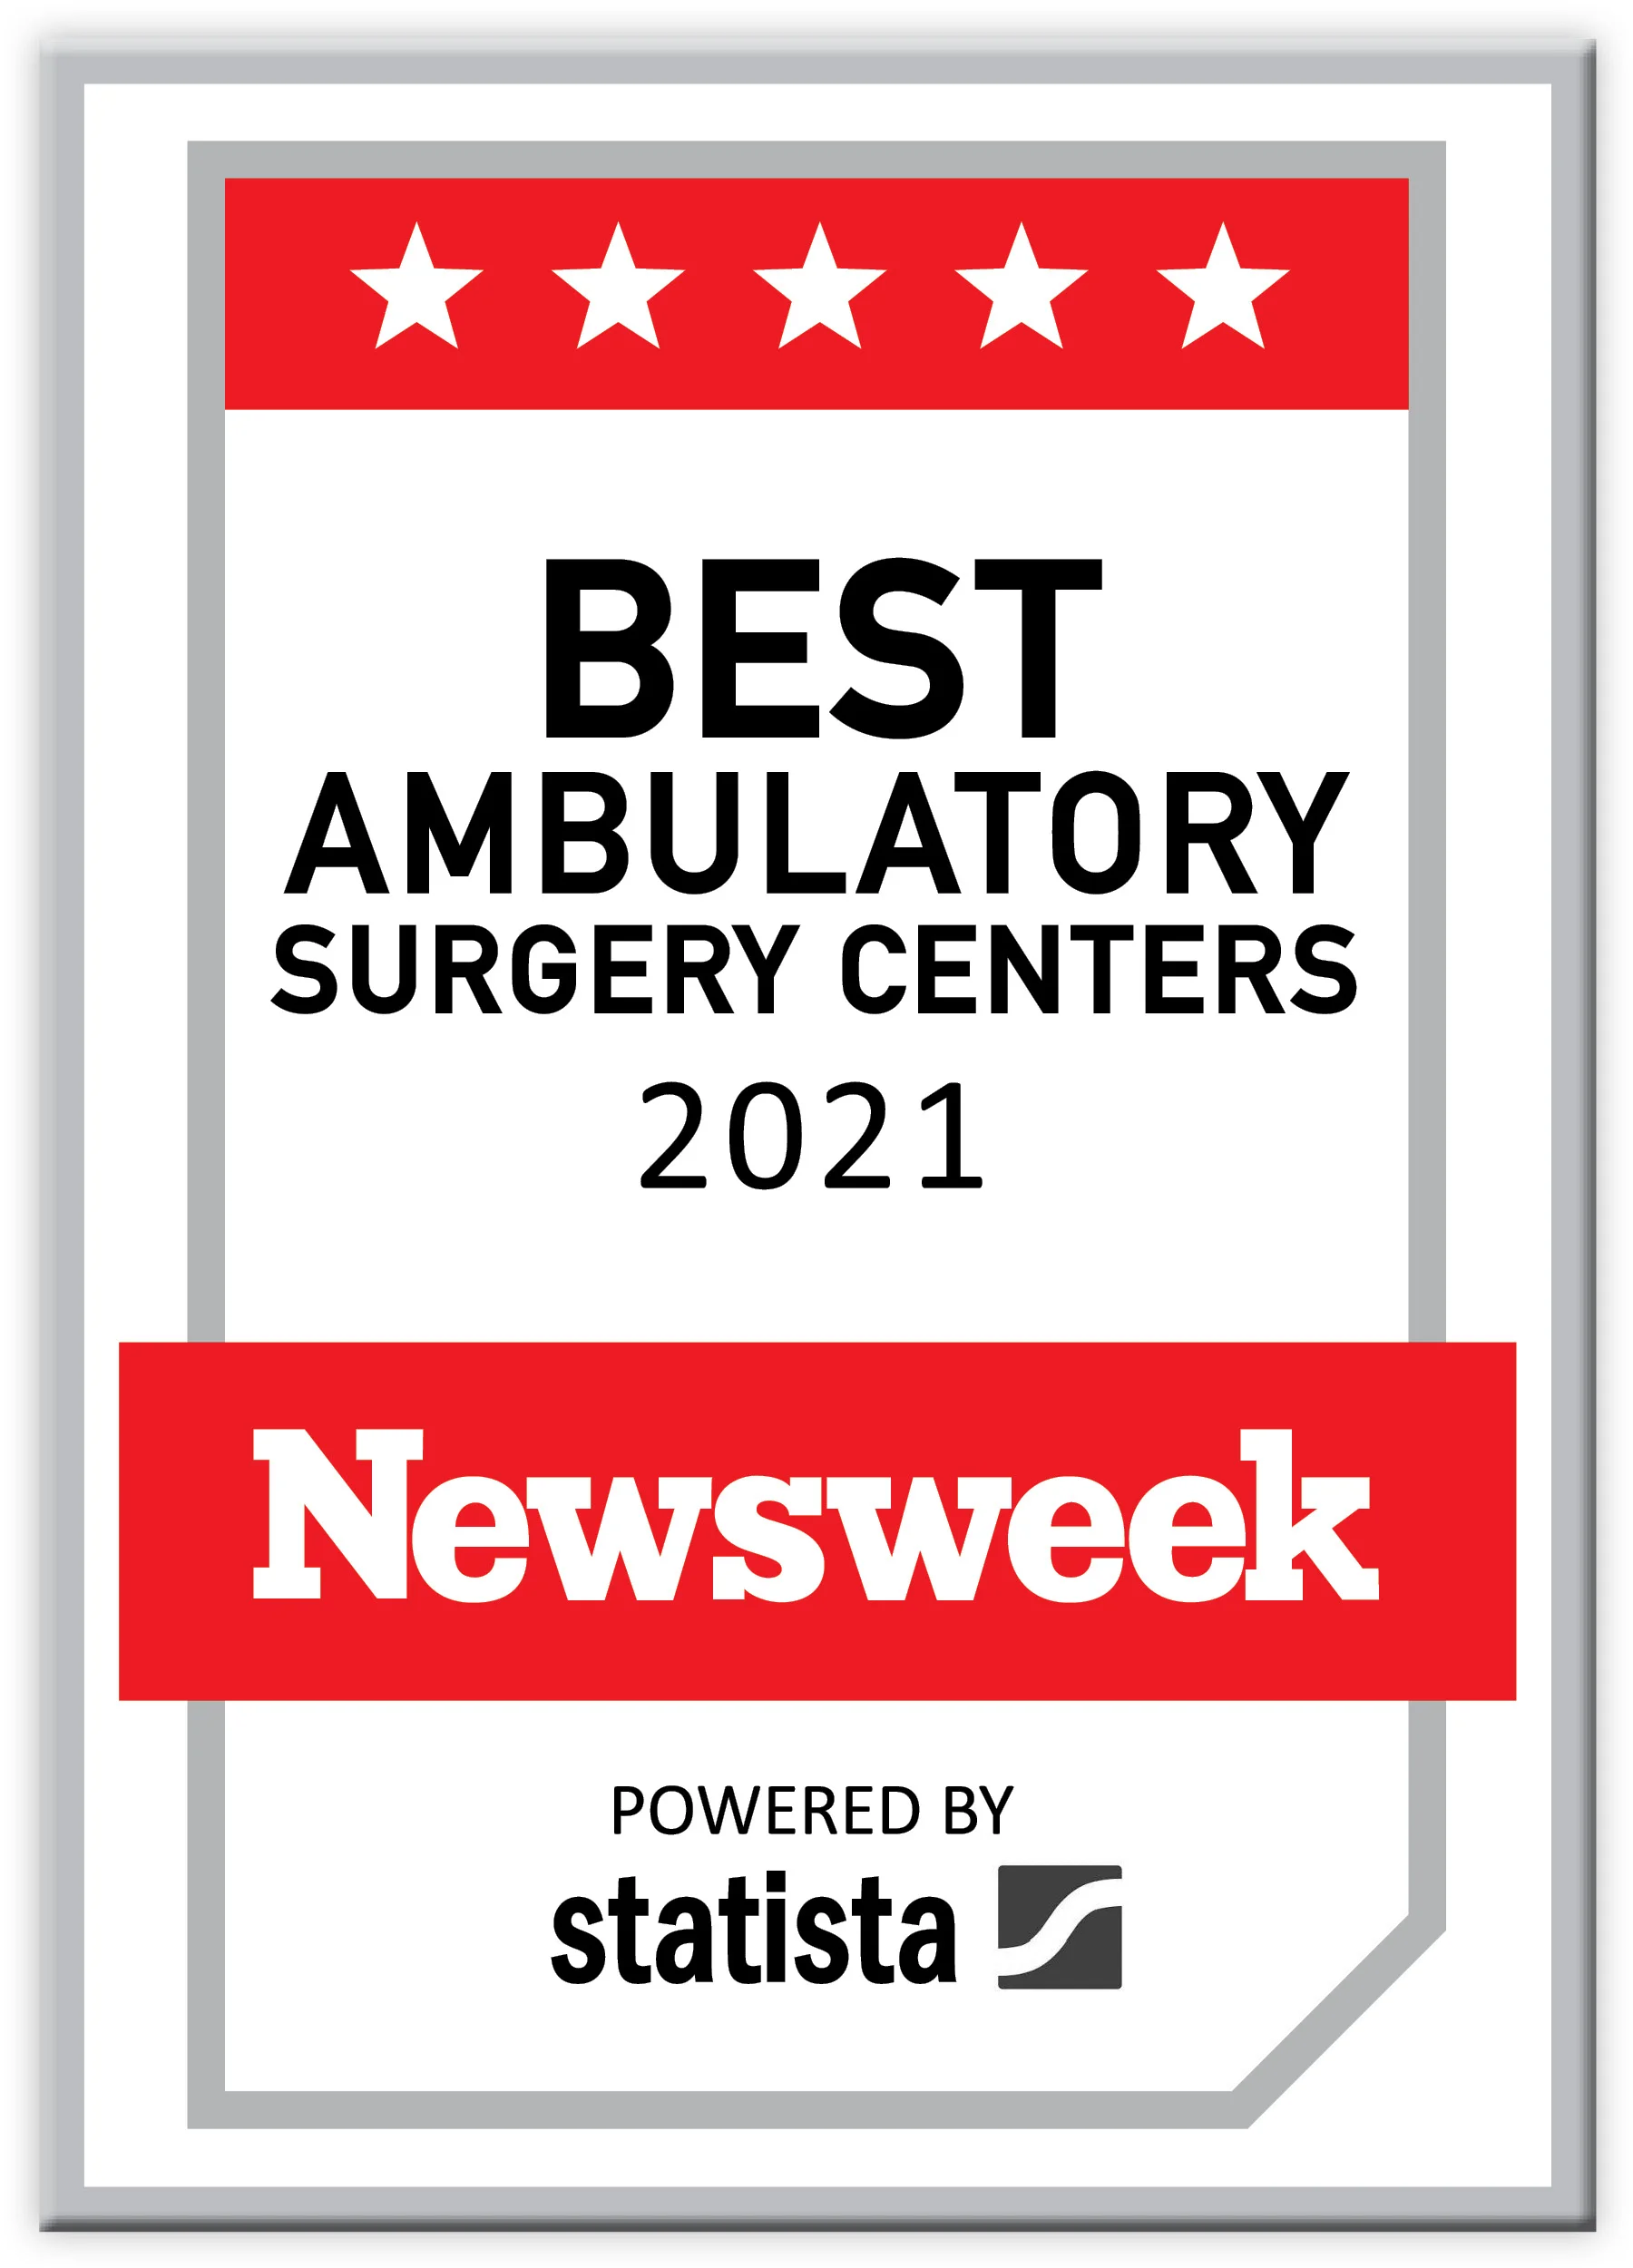 Best Ambulatory Surgery Centers in Colorado